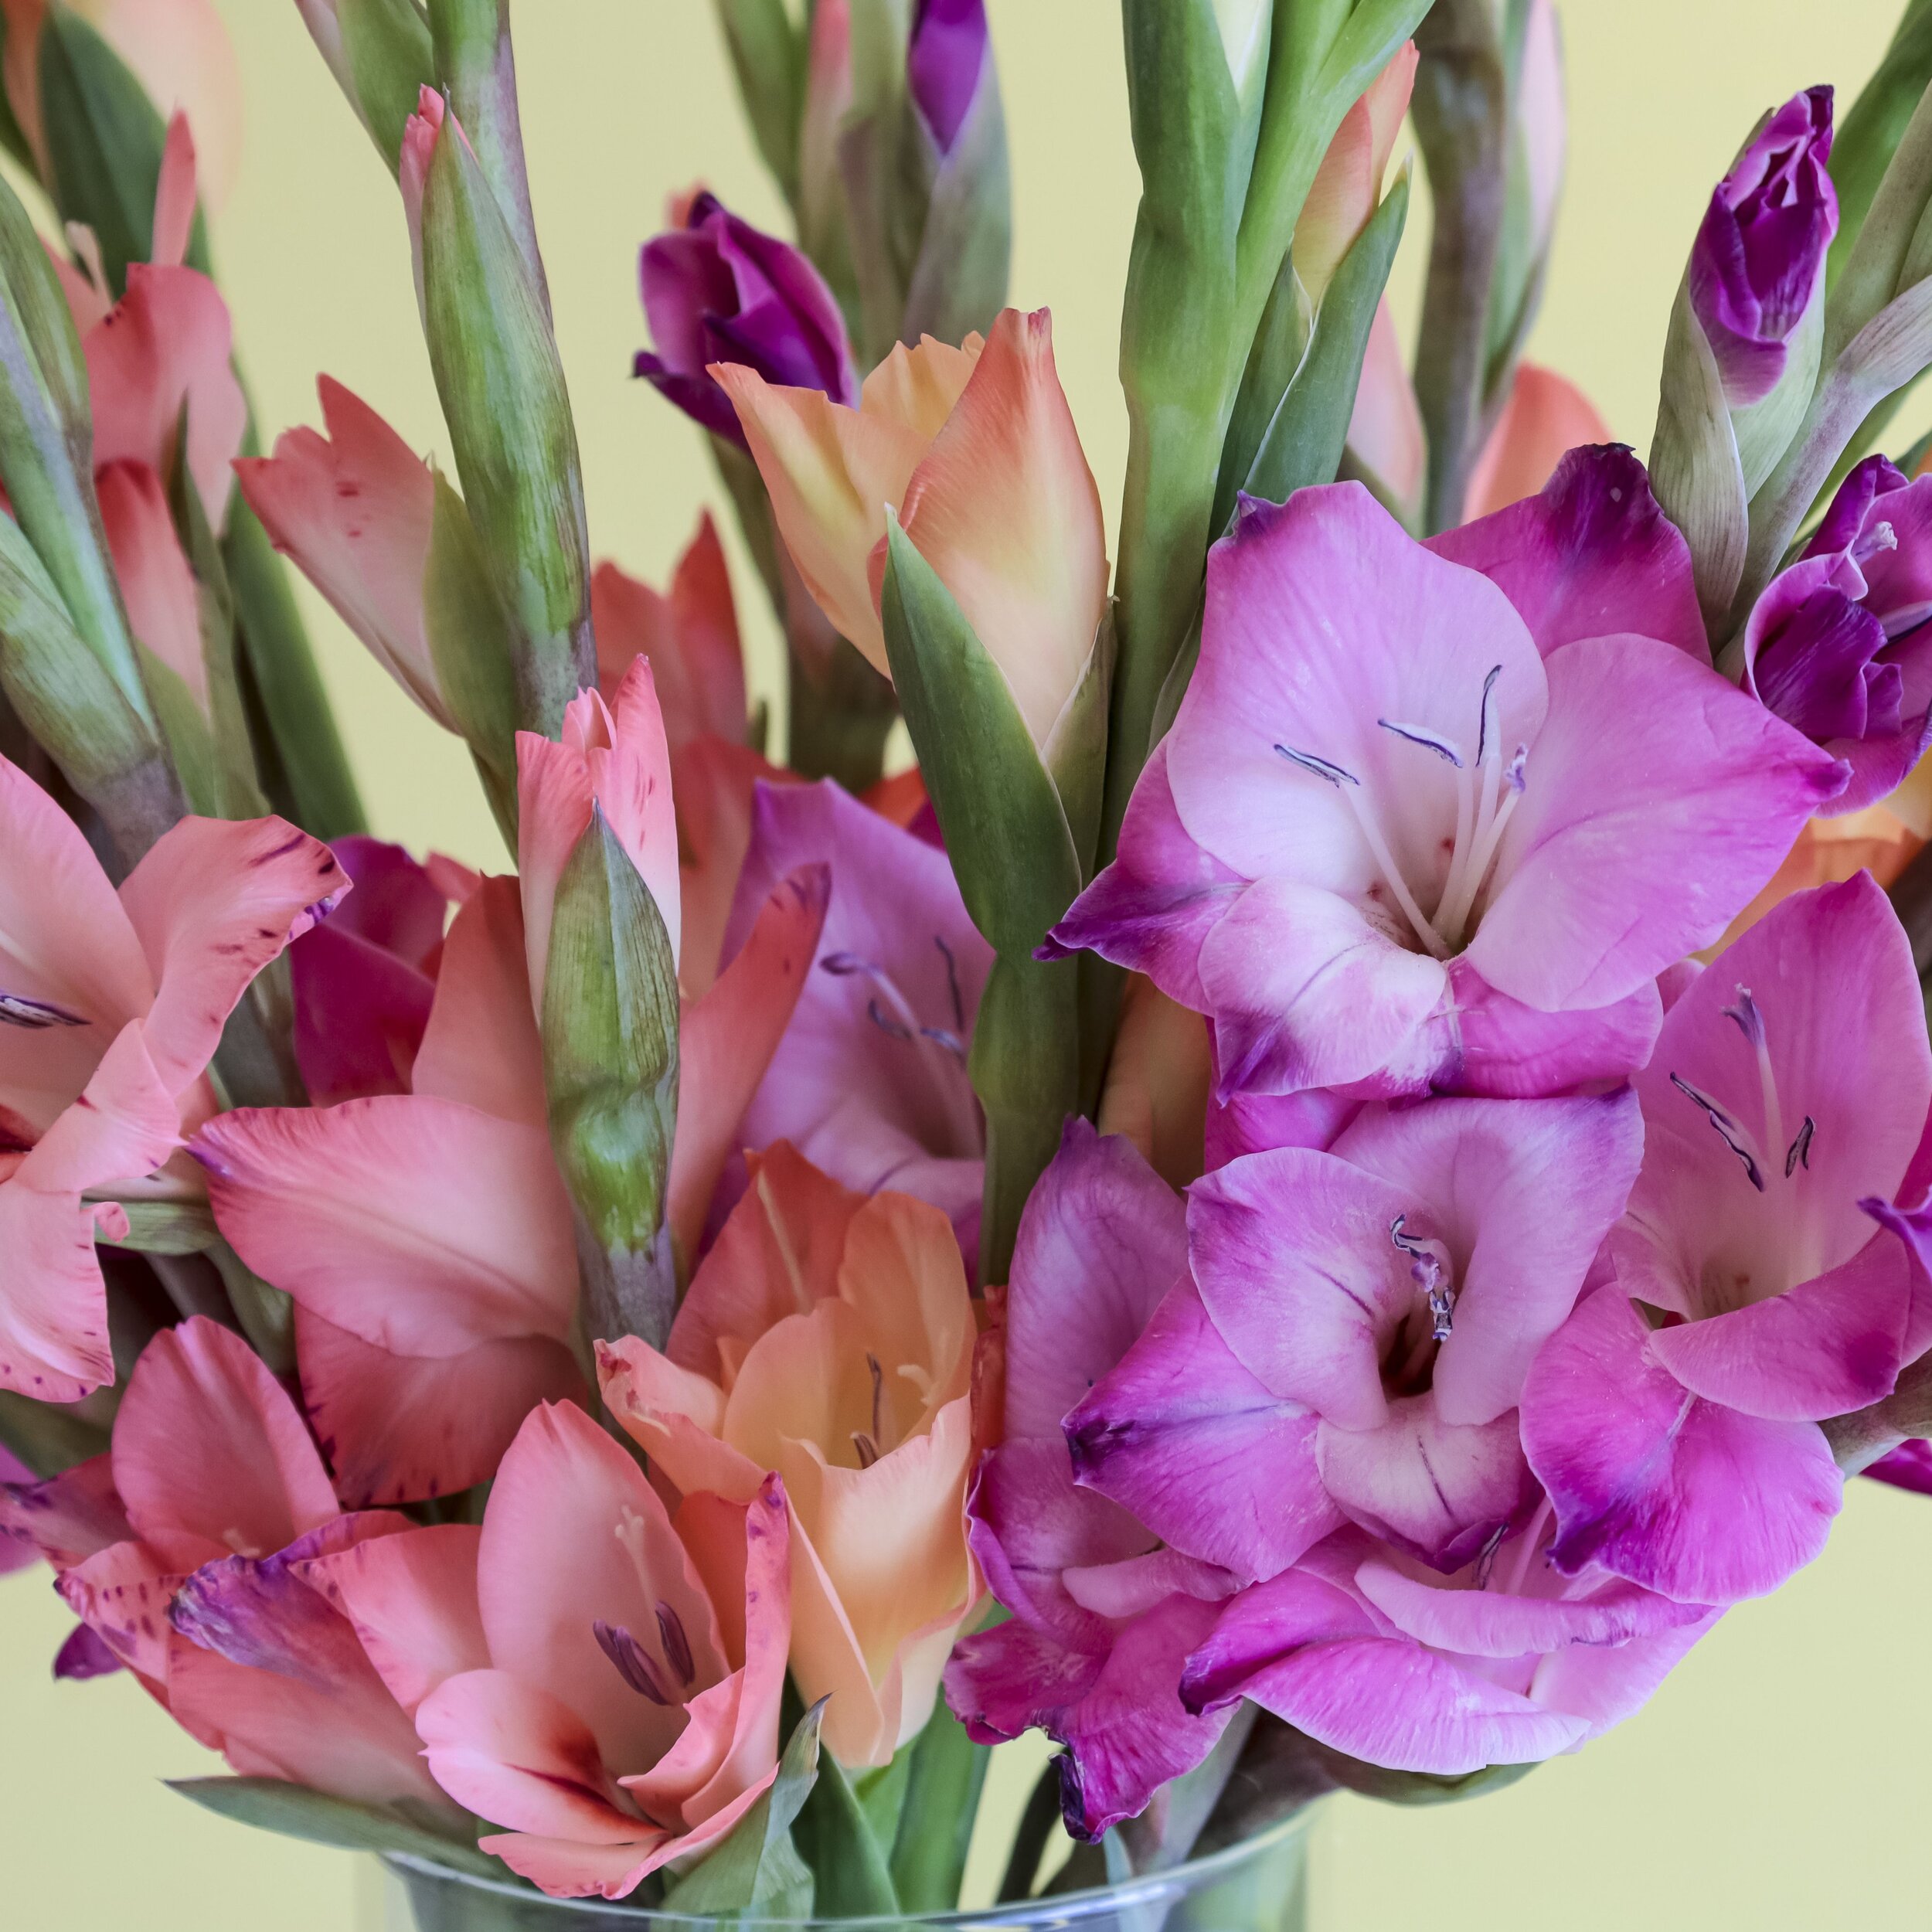 Gladiolus Flower Care